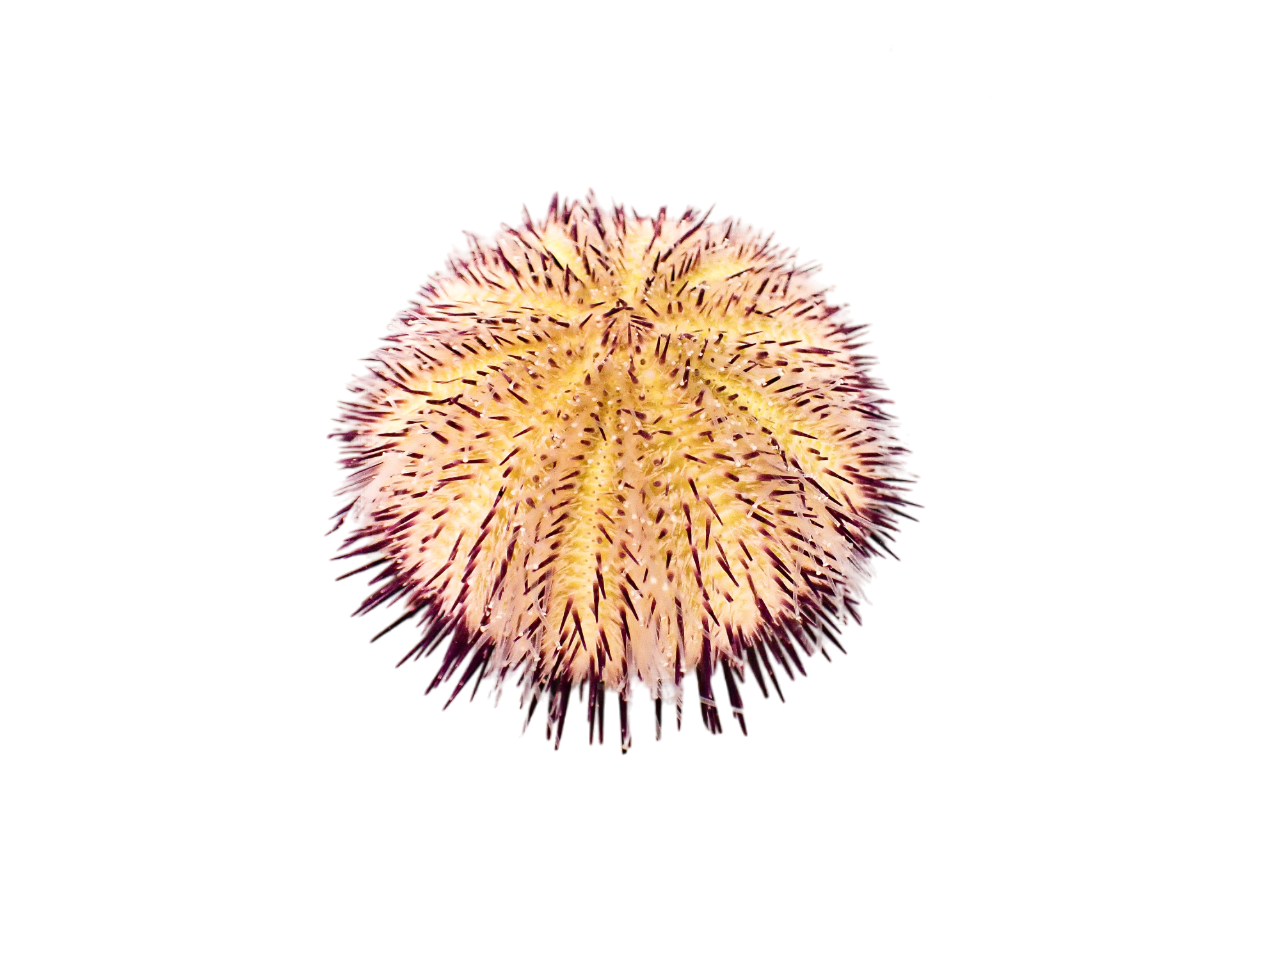 Purple Collector Urchin